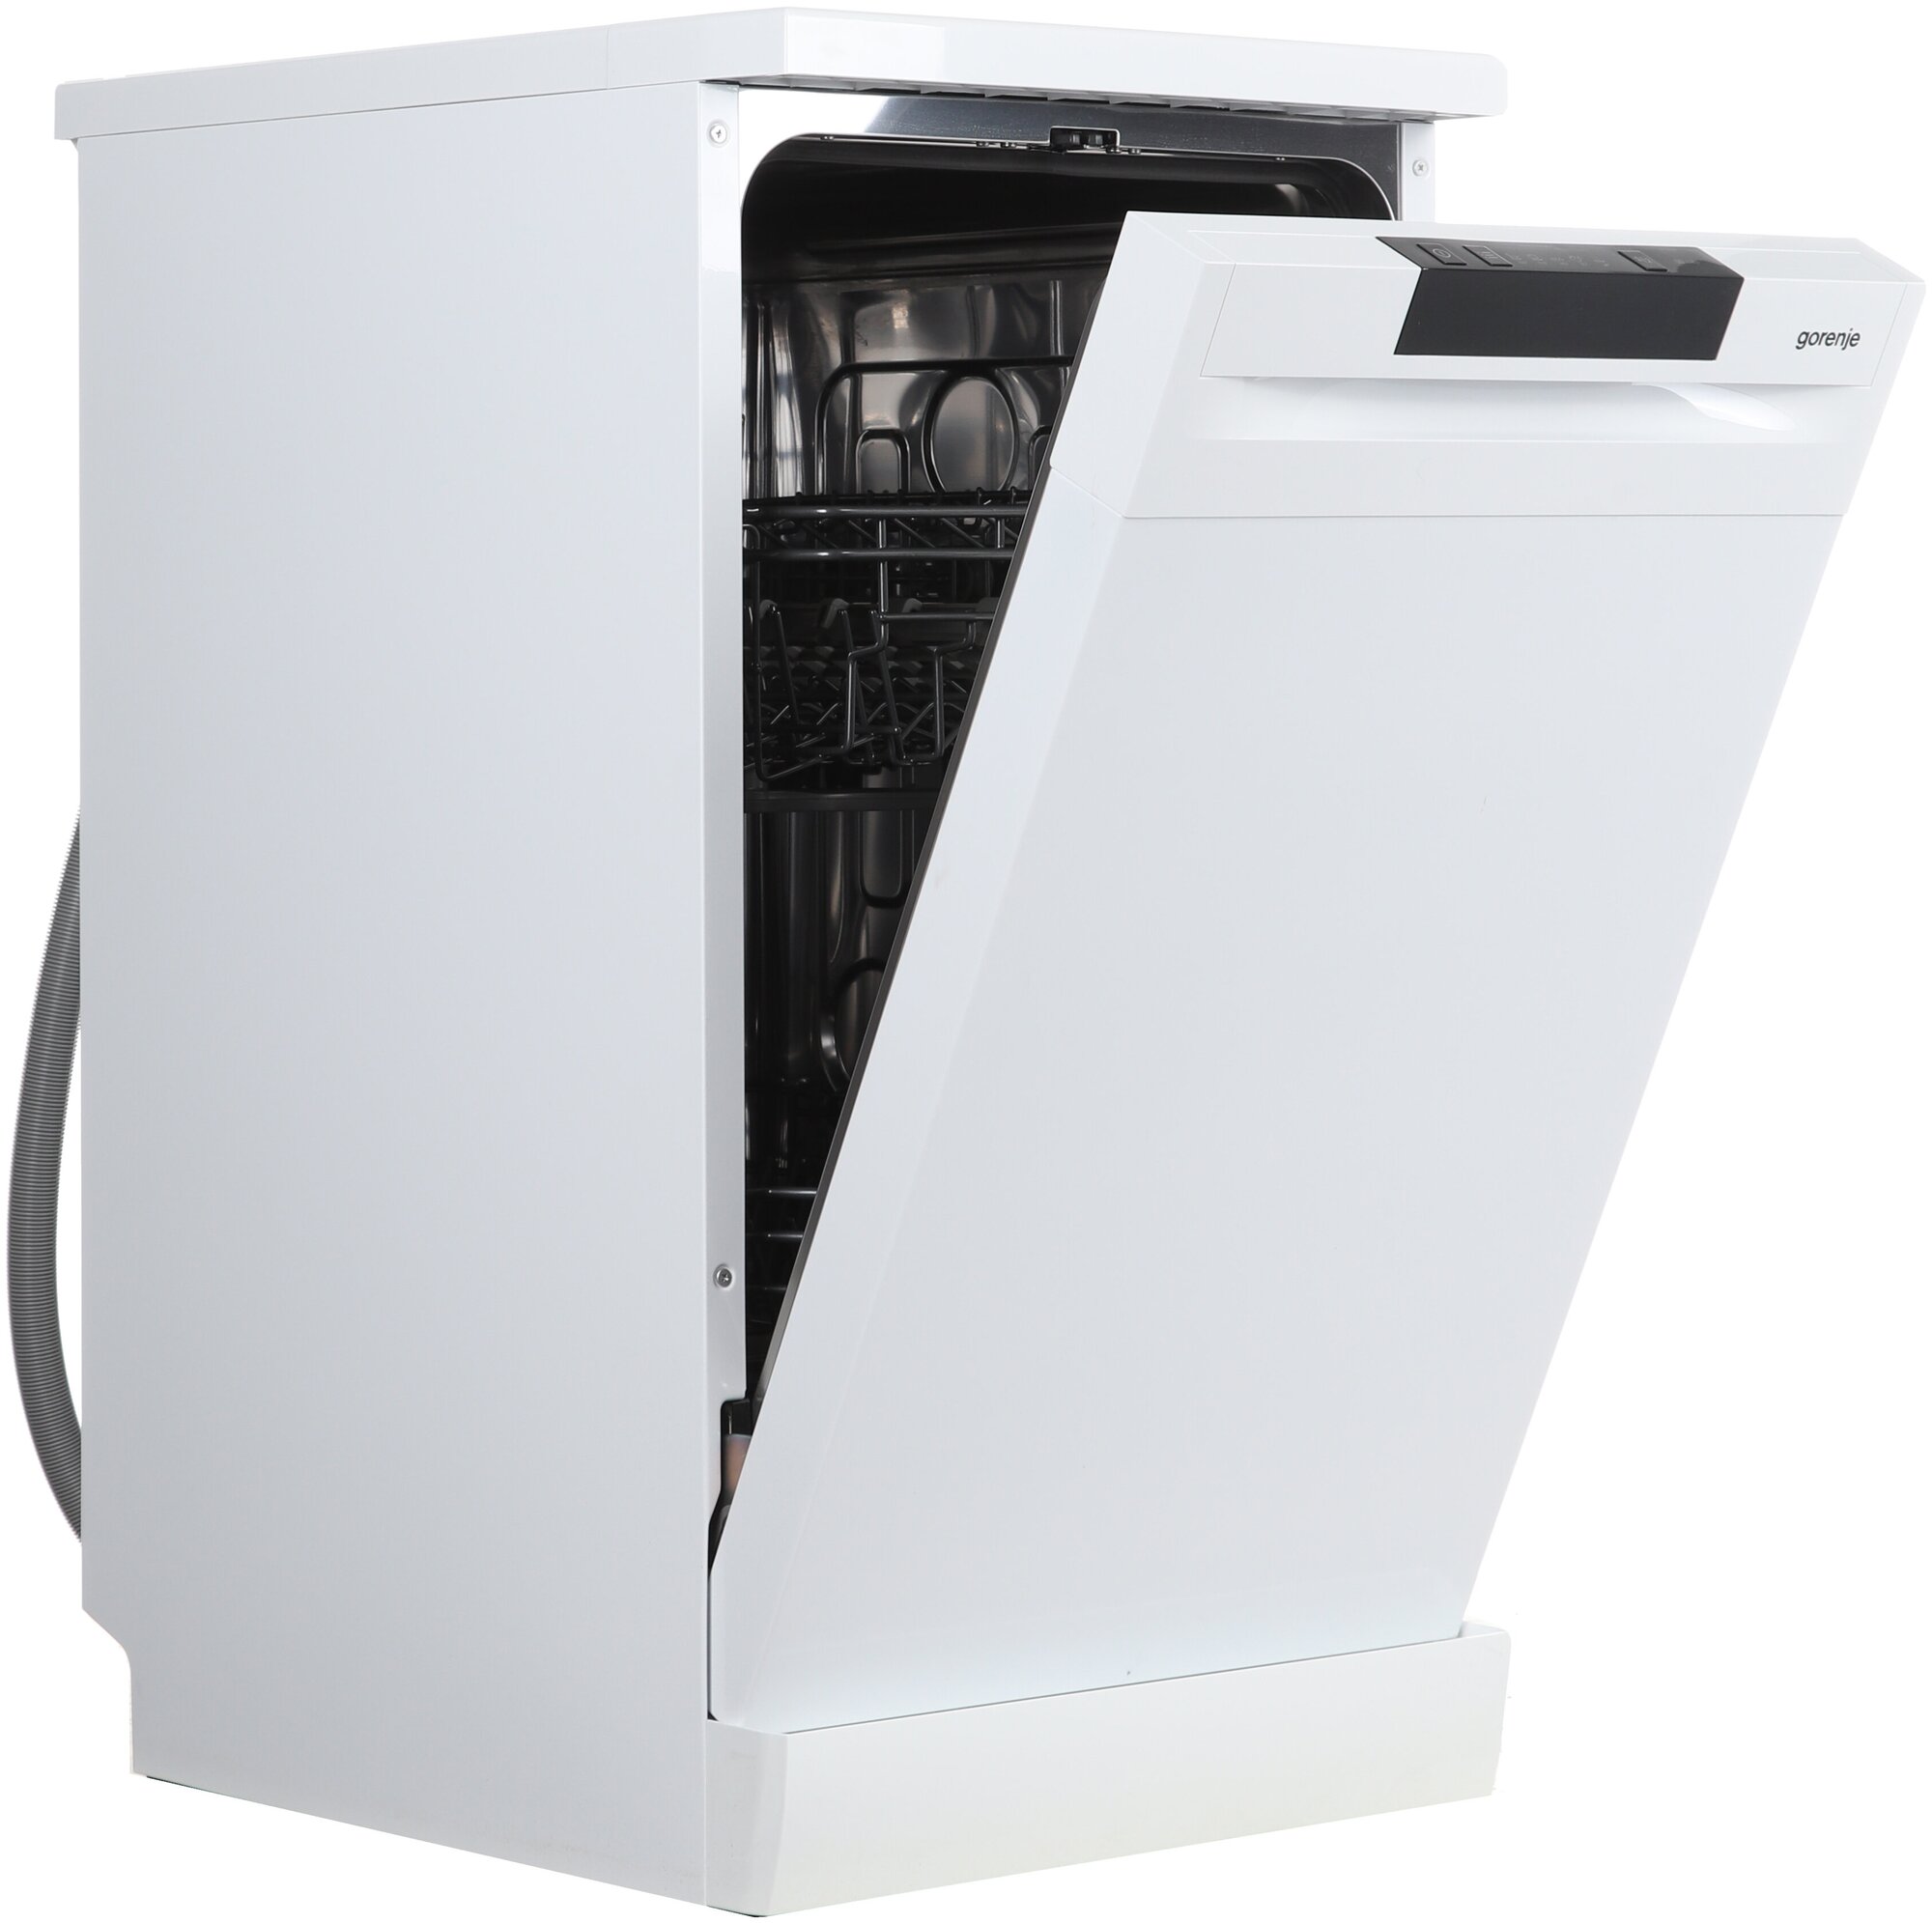 Посудомоечная машина Gorenje GS520E15W белый (узкая)